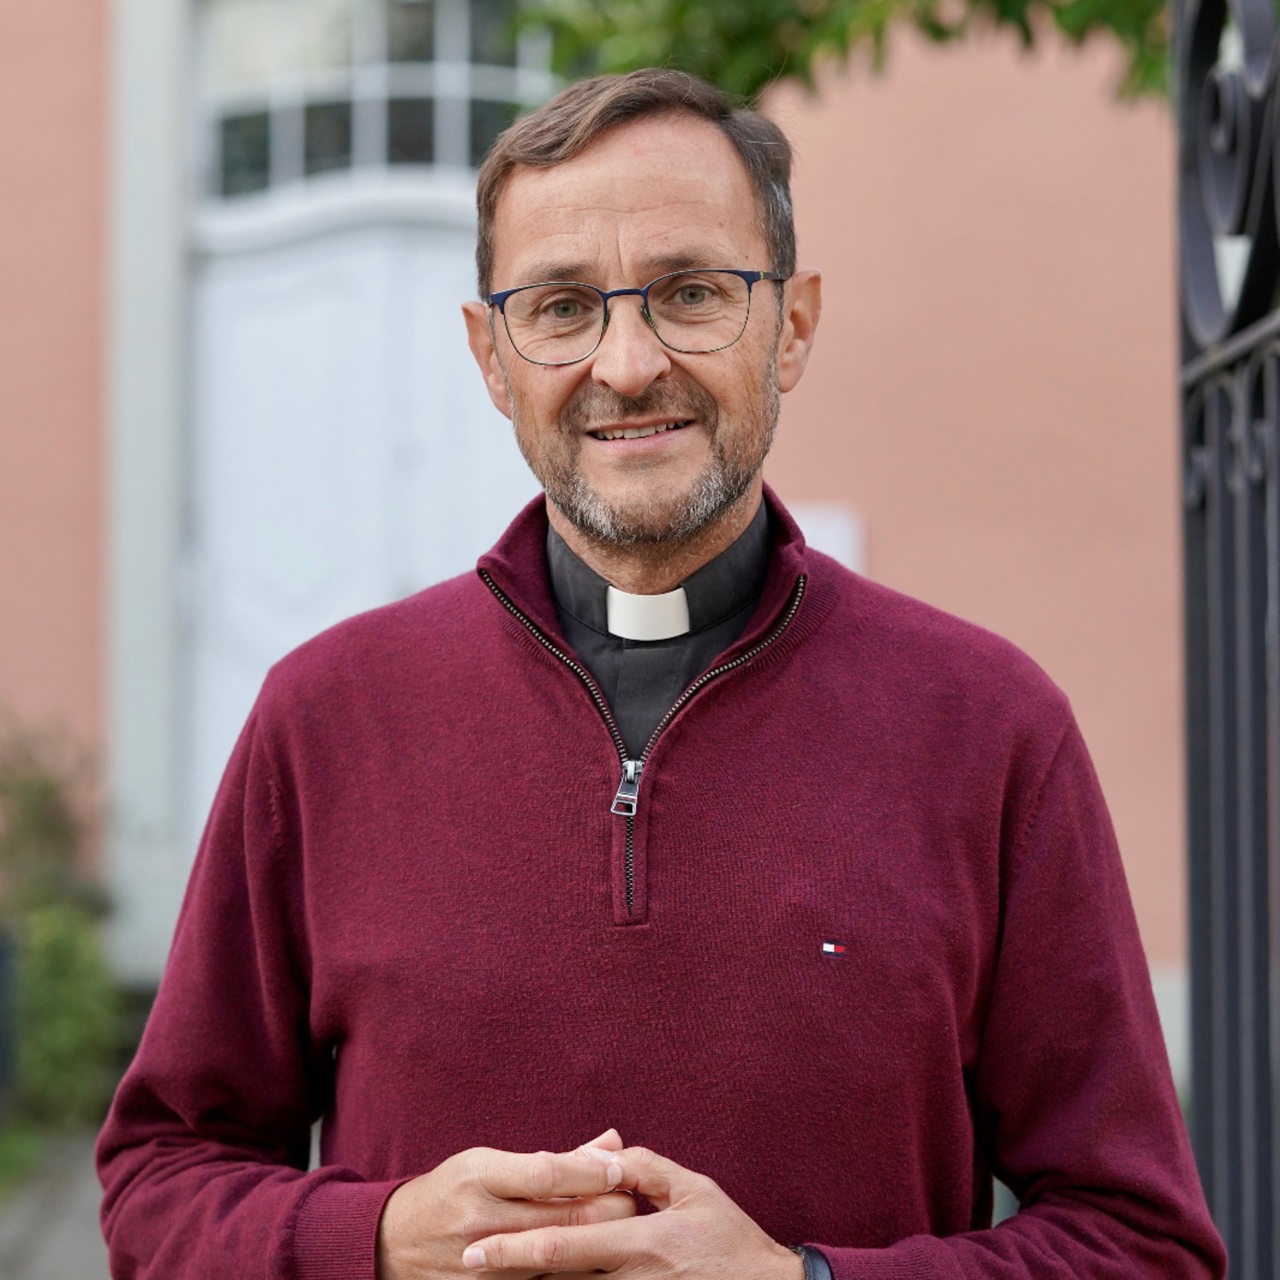 Pfarrer Jörg Meyrer aus dem Ahrtal